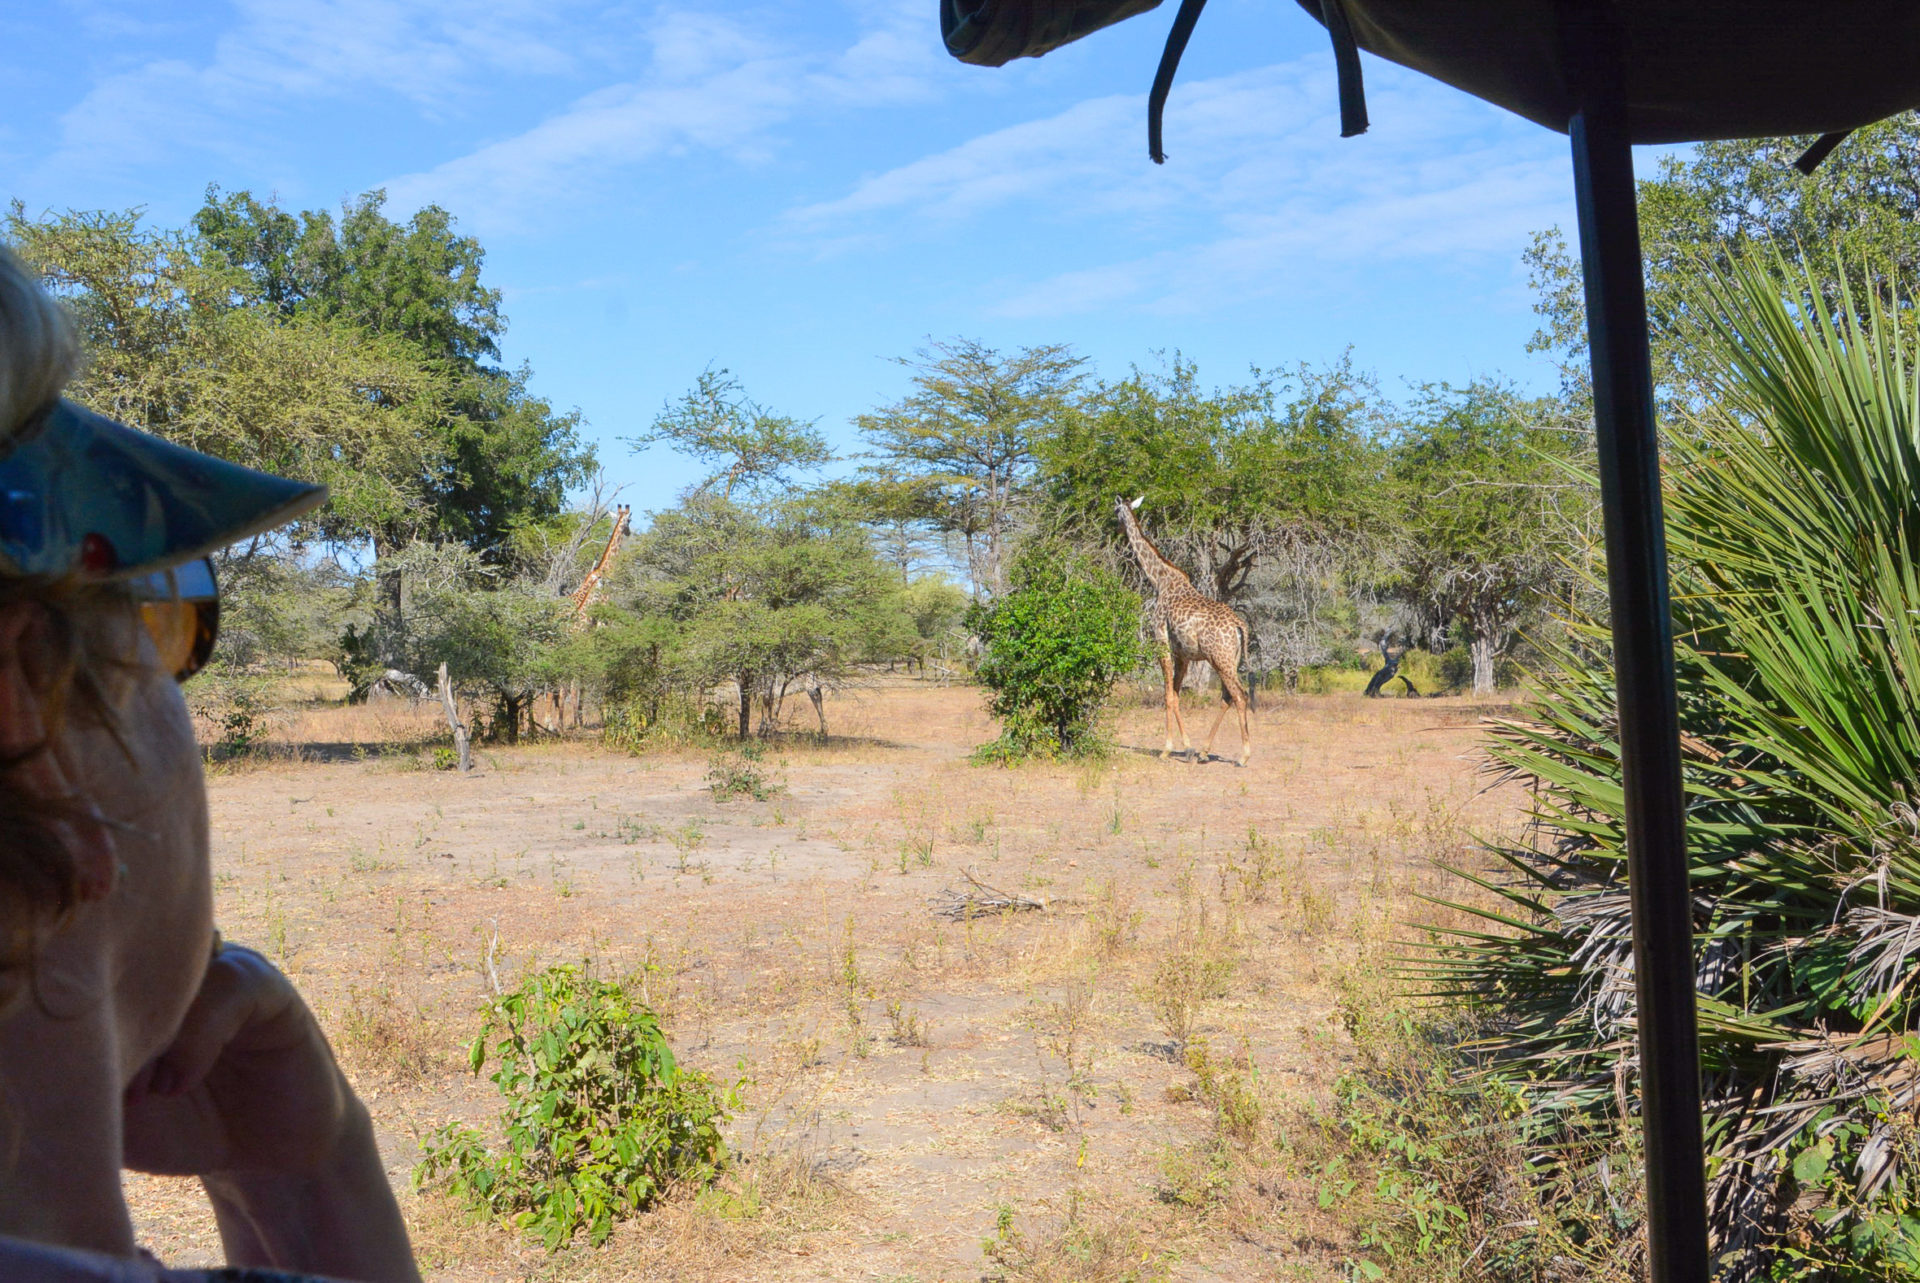 Touristin blickt auf Safari-Fahrzeug auf Giraffe in Tansania